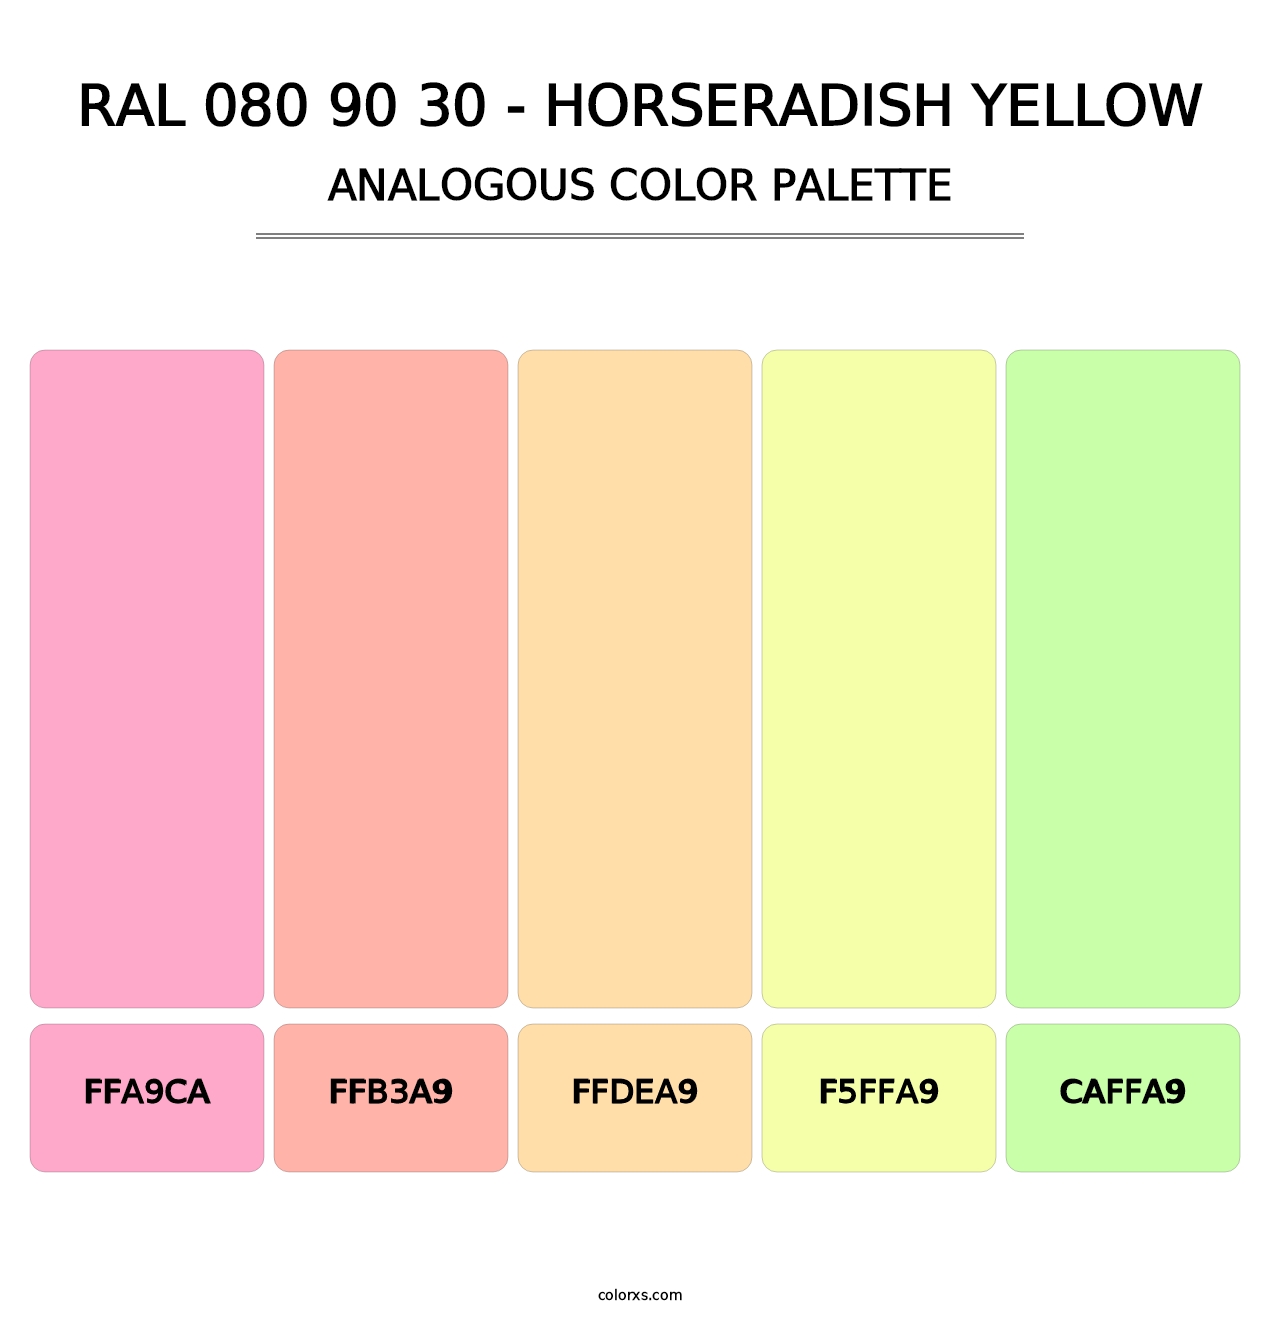 RAL 080 90 30 - Horseradish Yellow - Analogous Color Palette